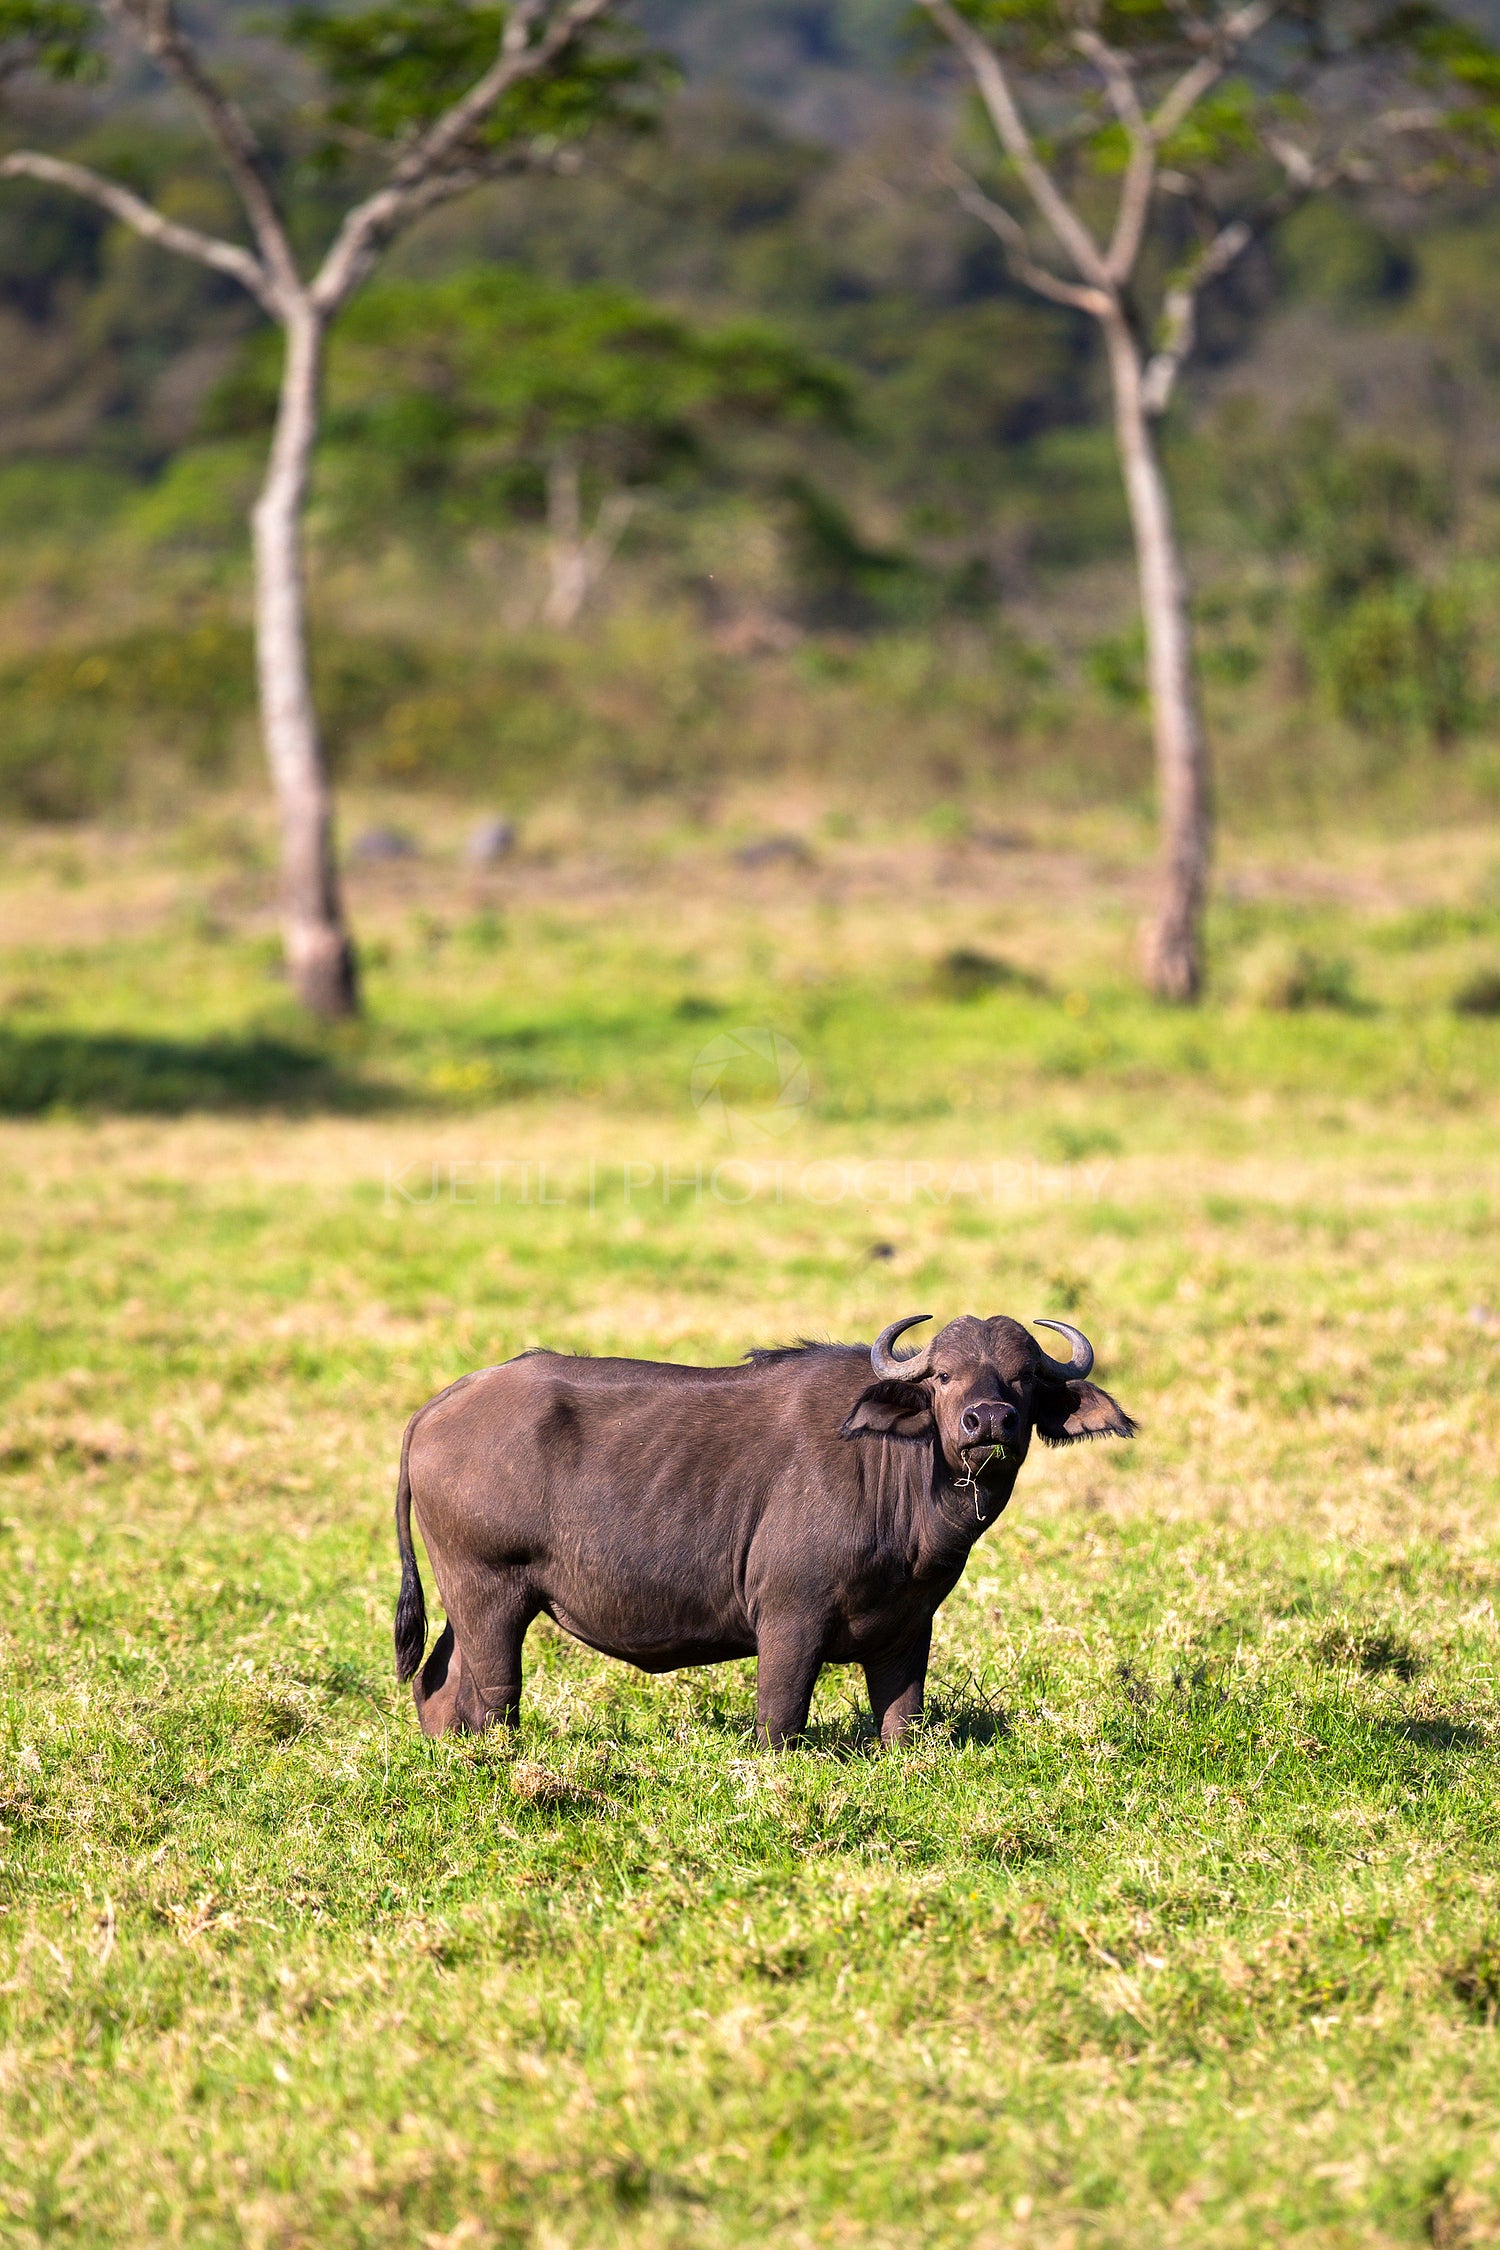 Big buffalo eats grass in idyllic Africa